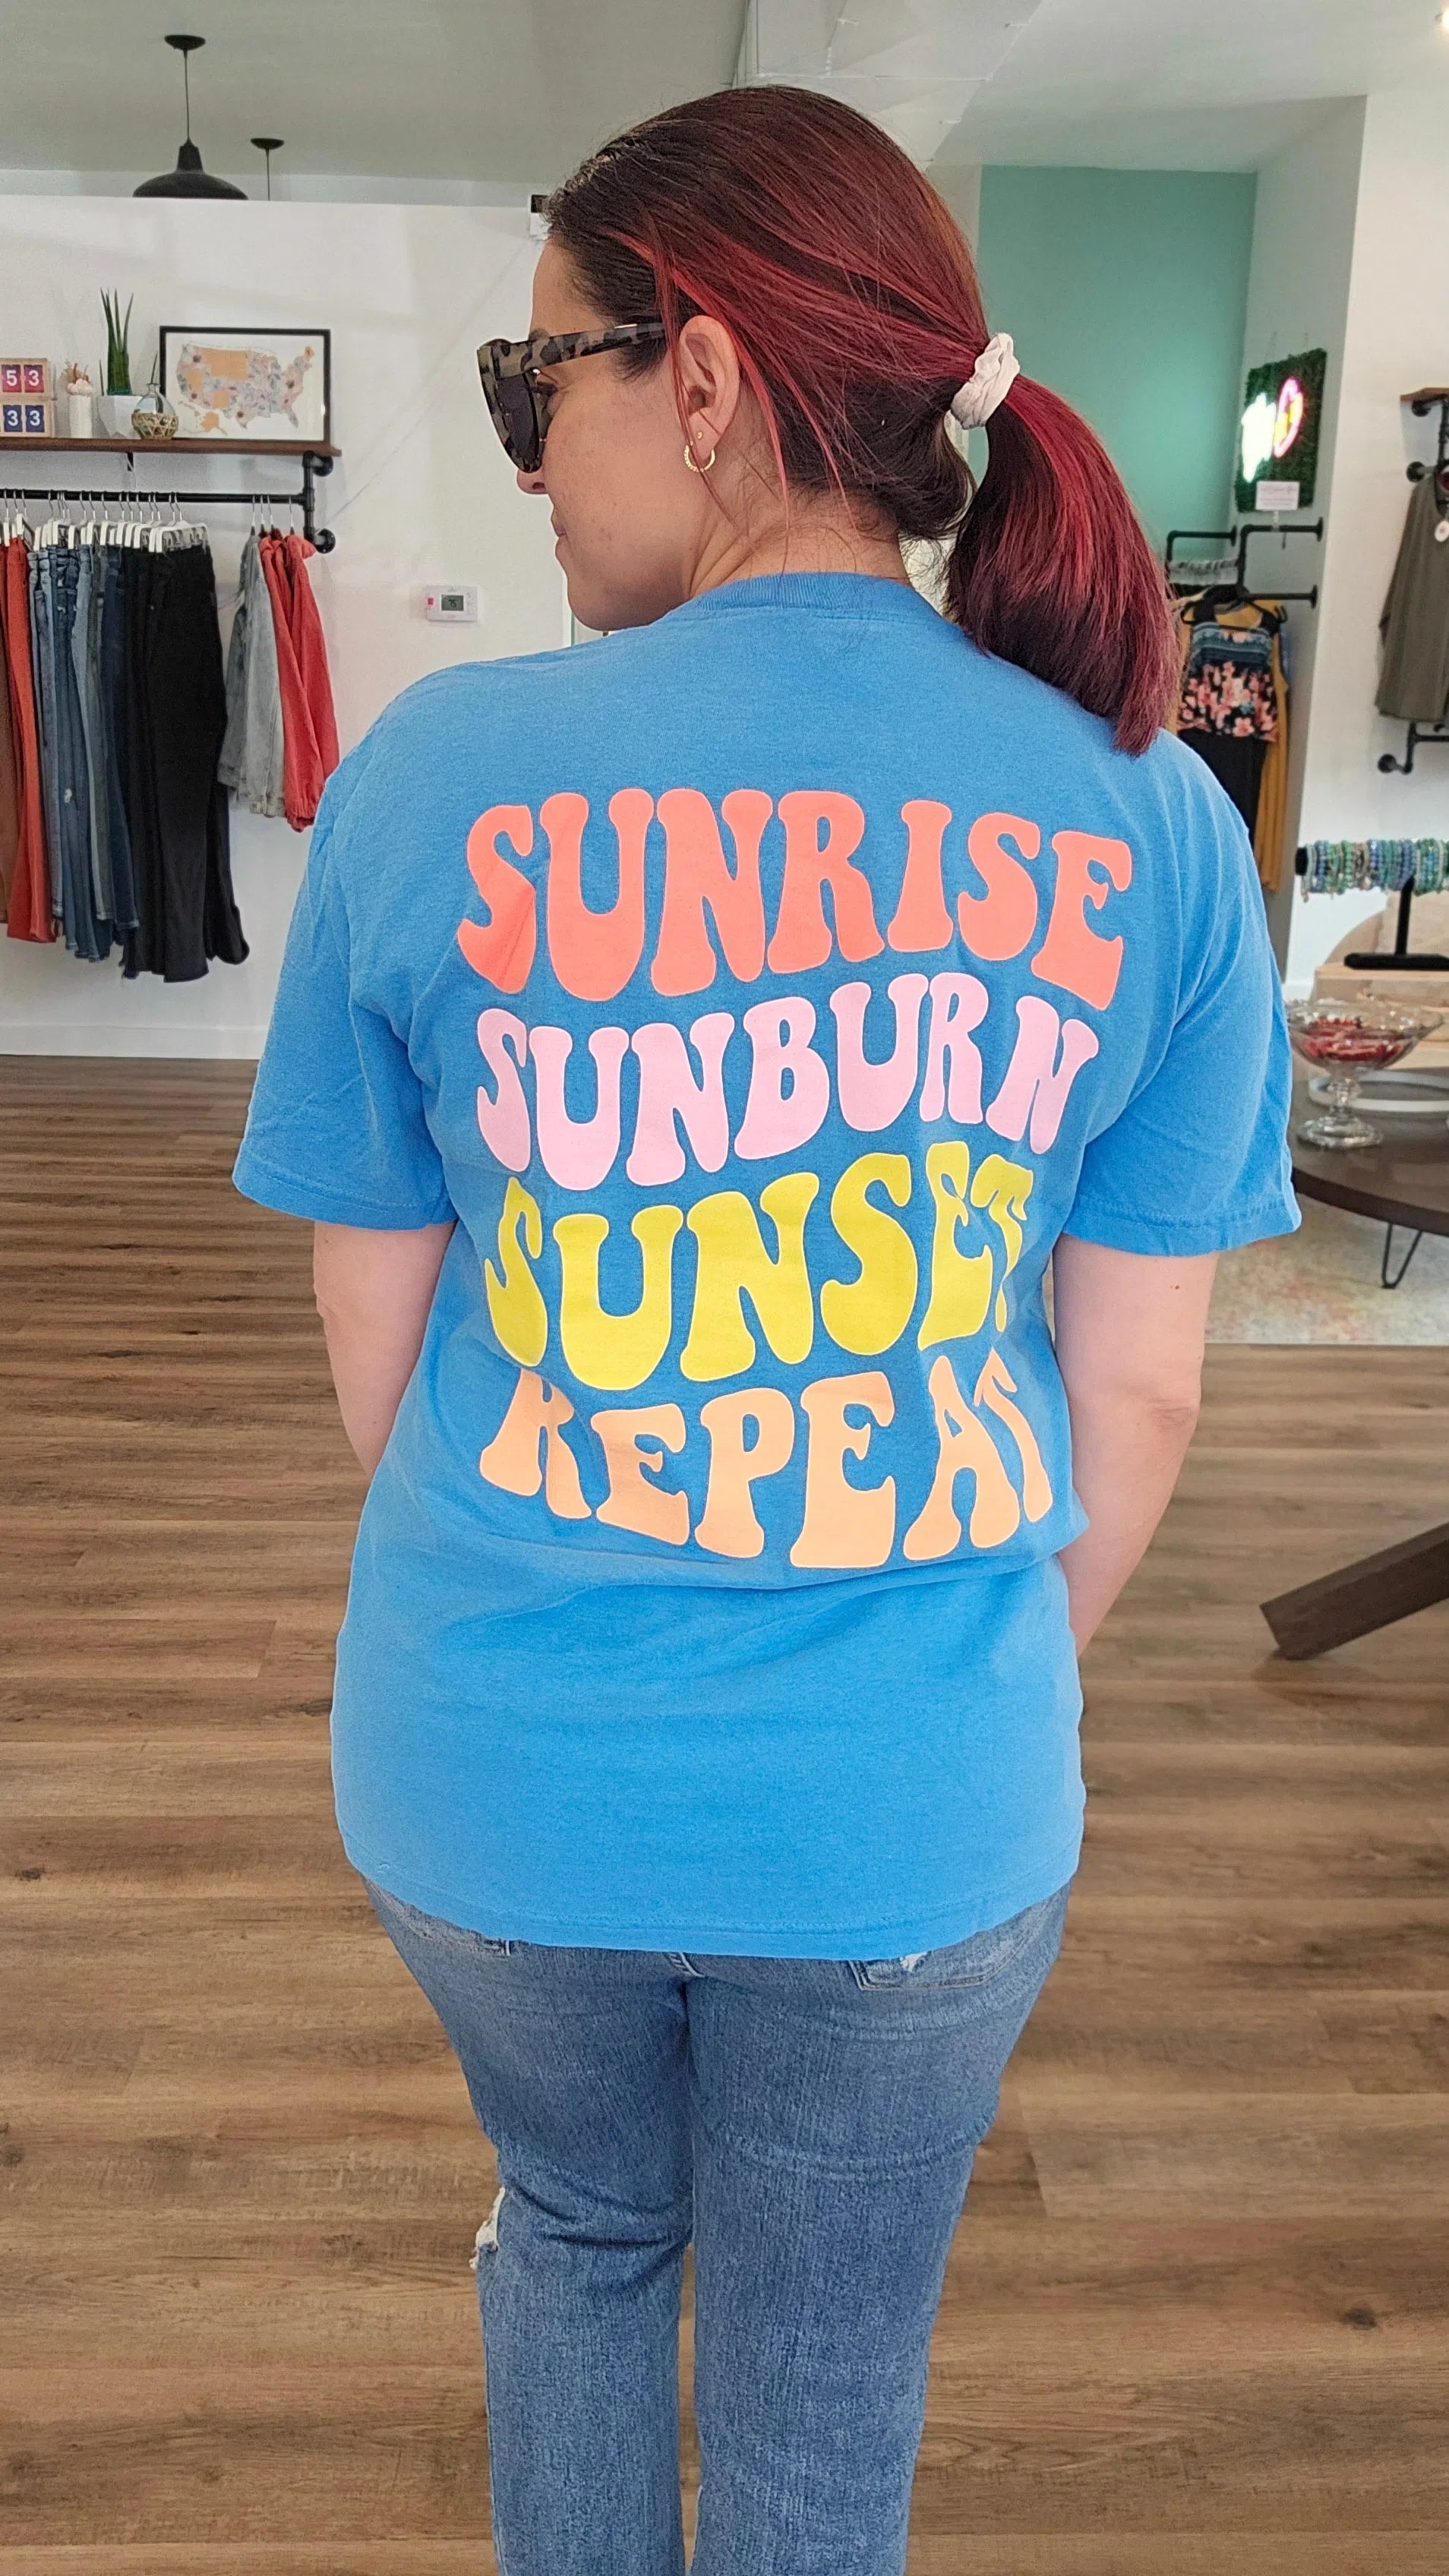 Shop Sunrise, Sunburn, Sunset, Repeat-Graphic Tee at Ruby Joy Boutique, a Women's Clothing Store in Pickerington, Ohio